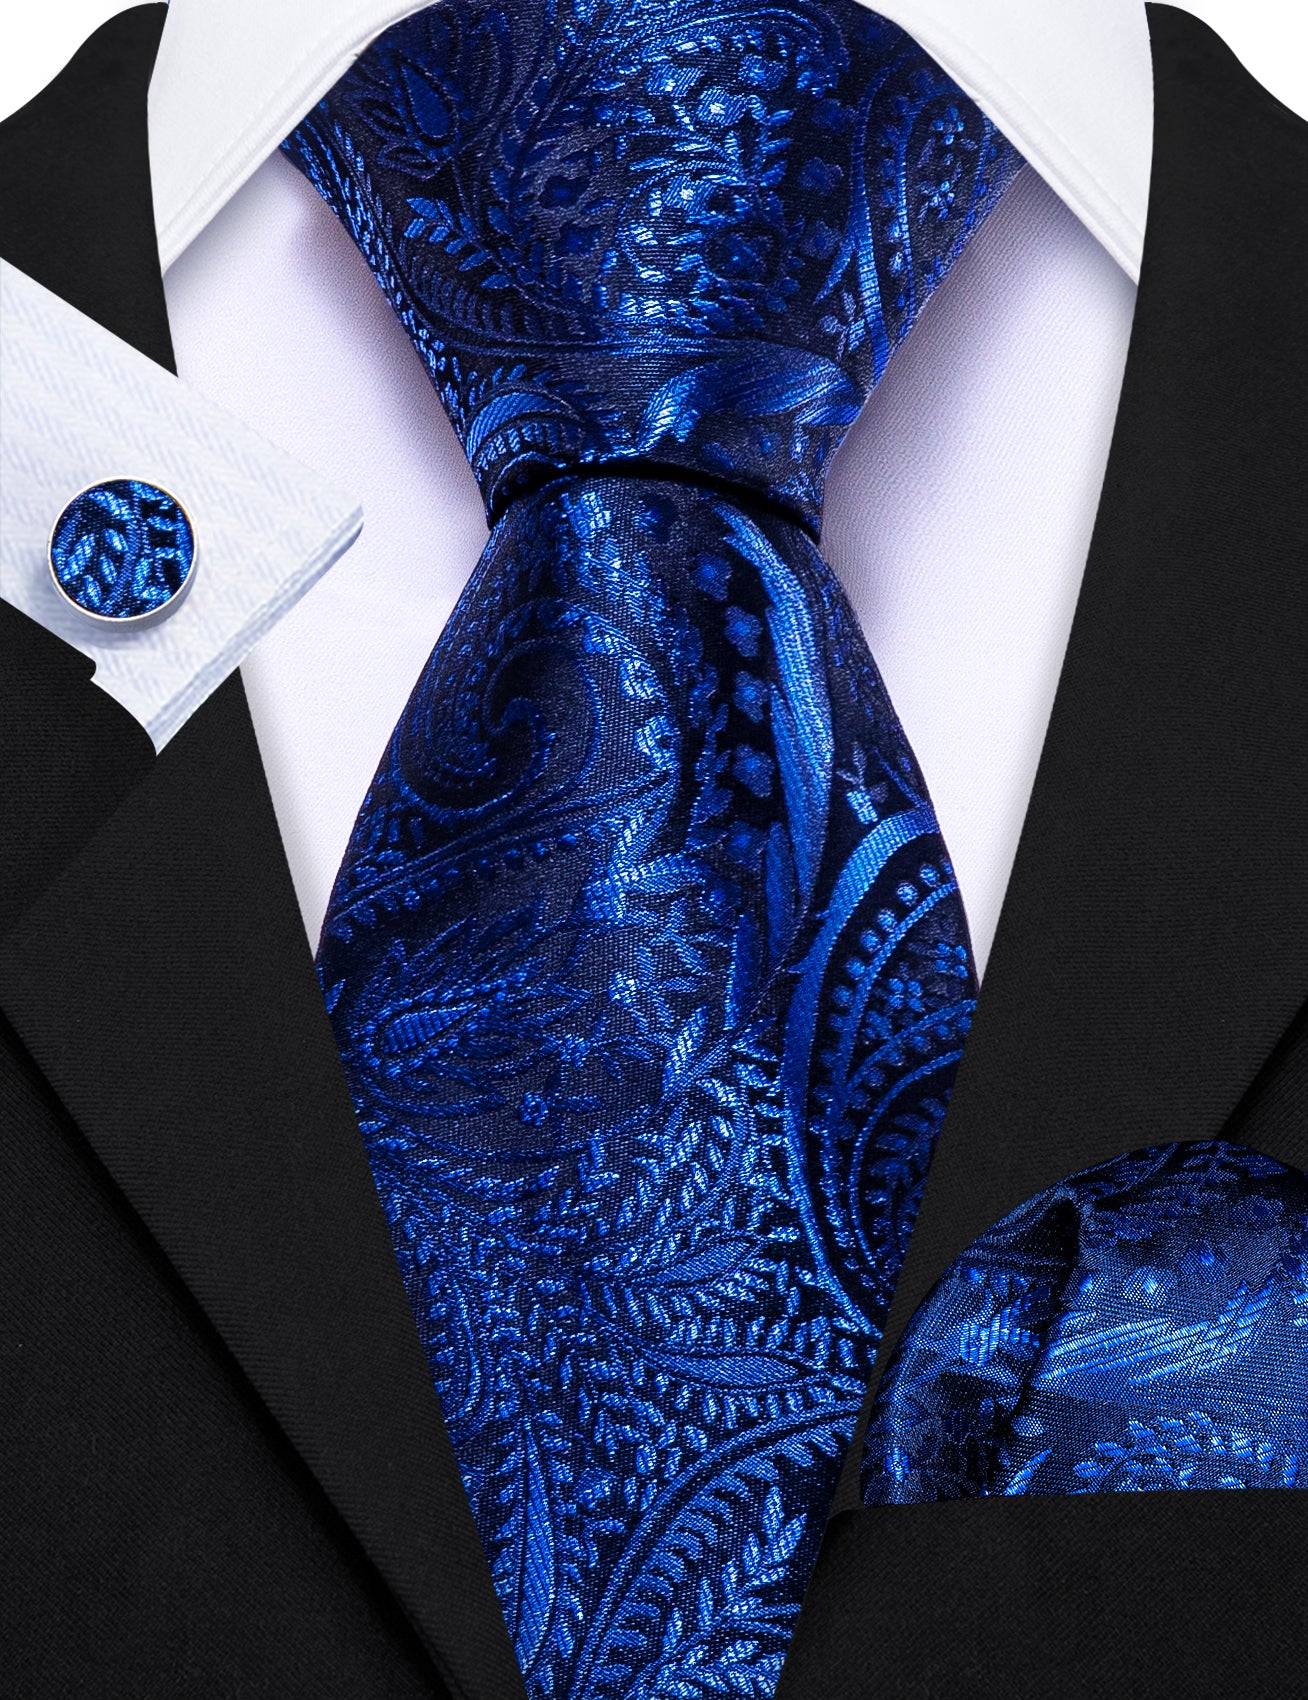 Barrywang Blue Paisley Silk Tie Handkerchief Cufflinks Set